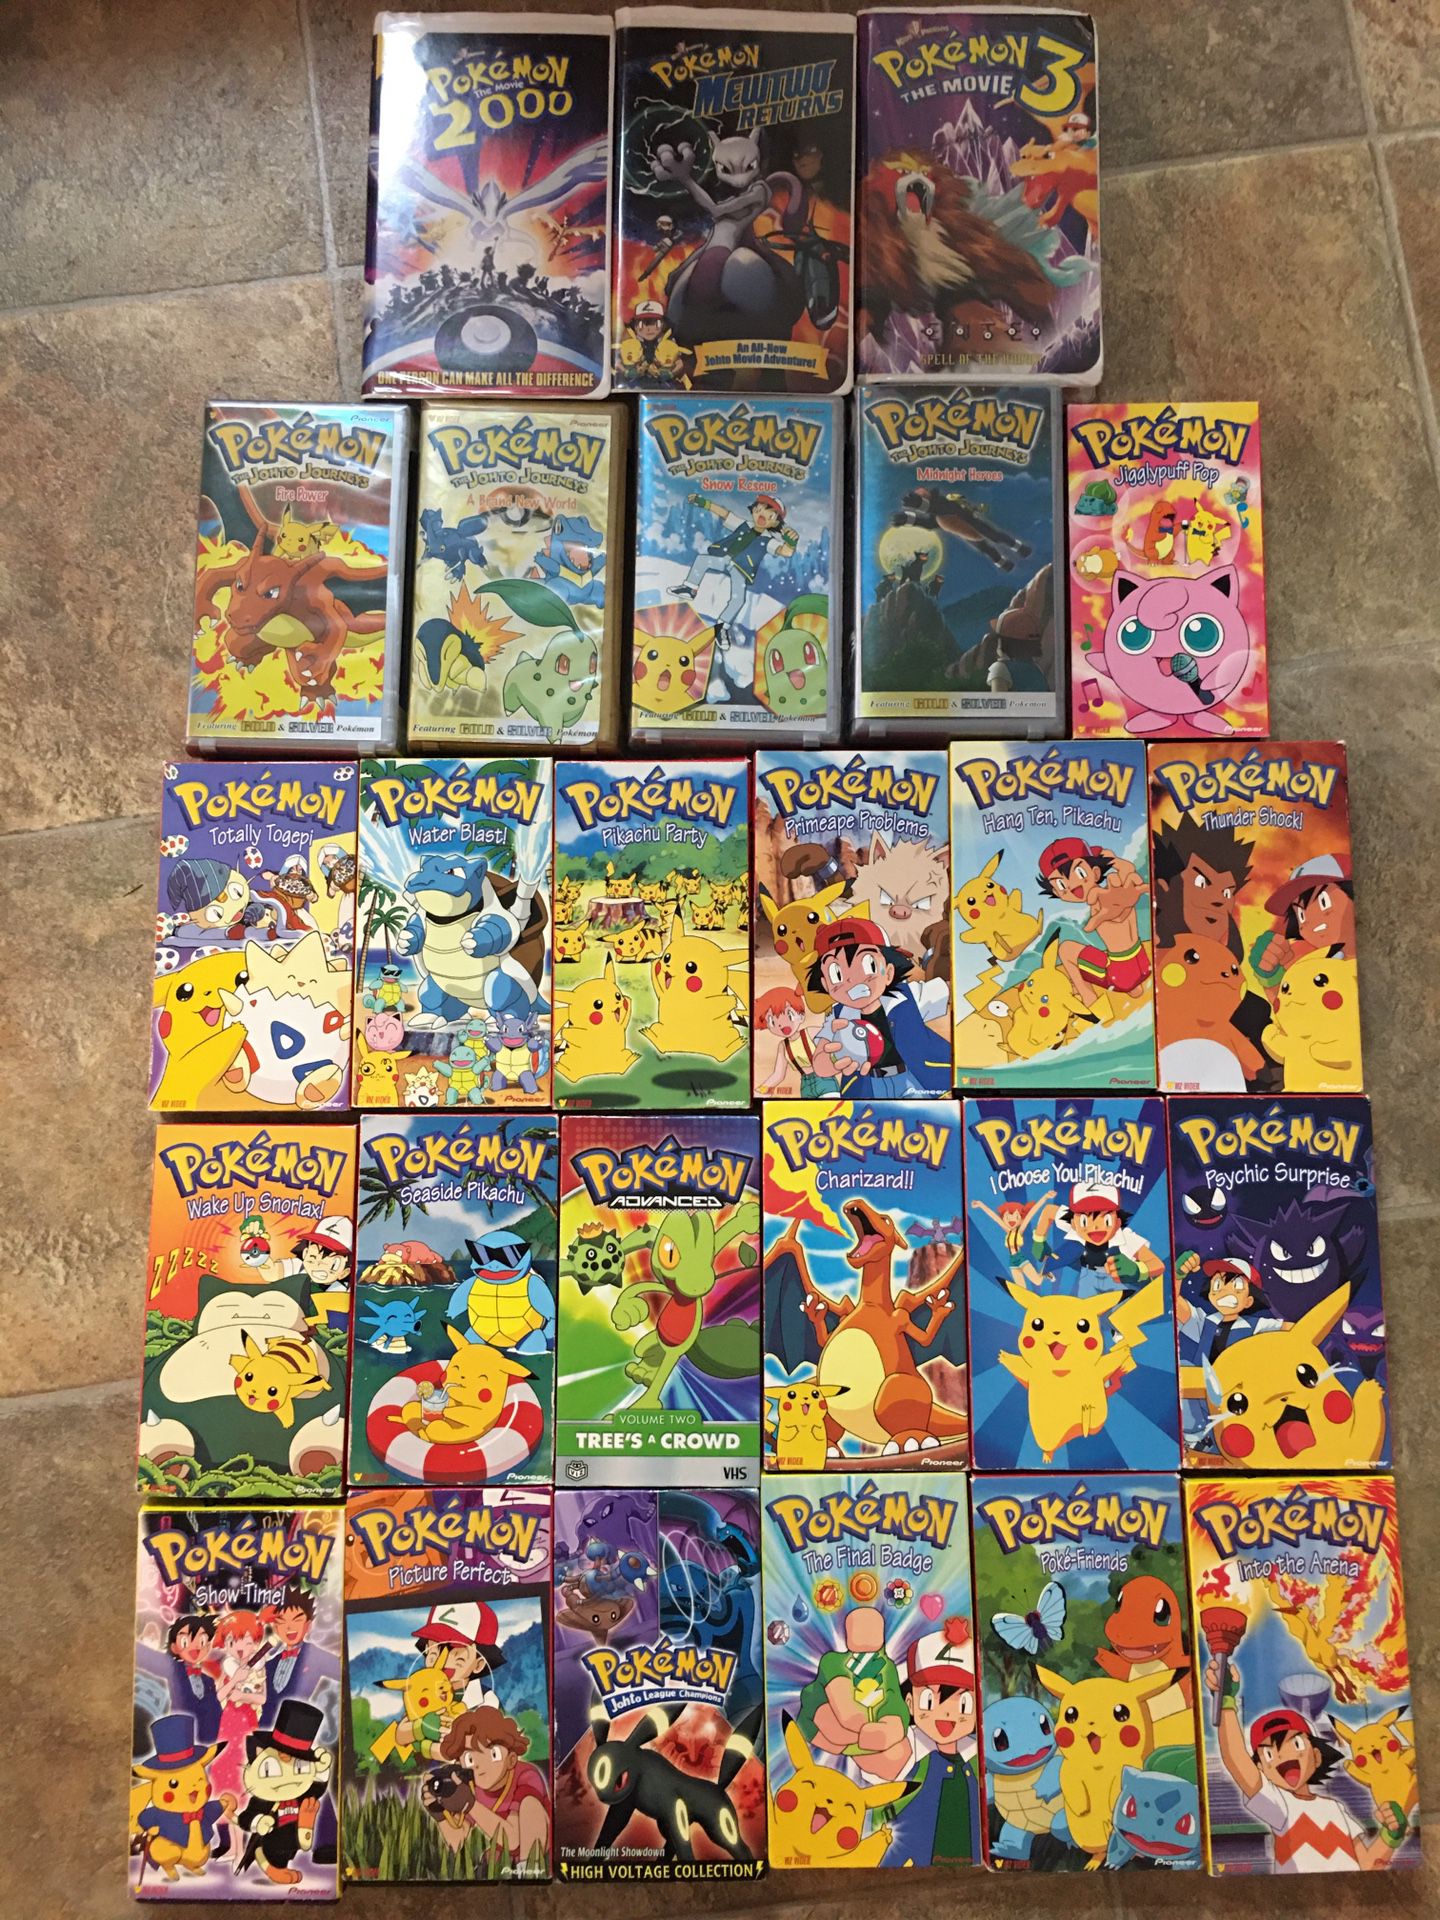 26 Pokeman VHS tapes - take all